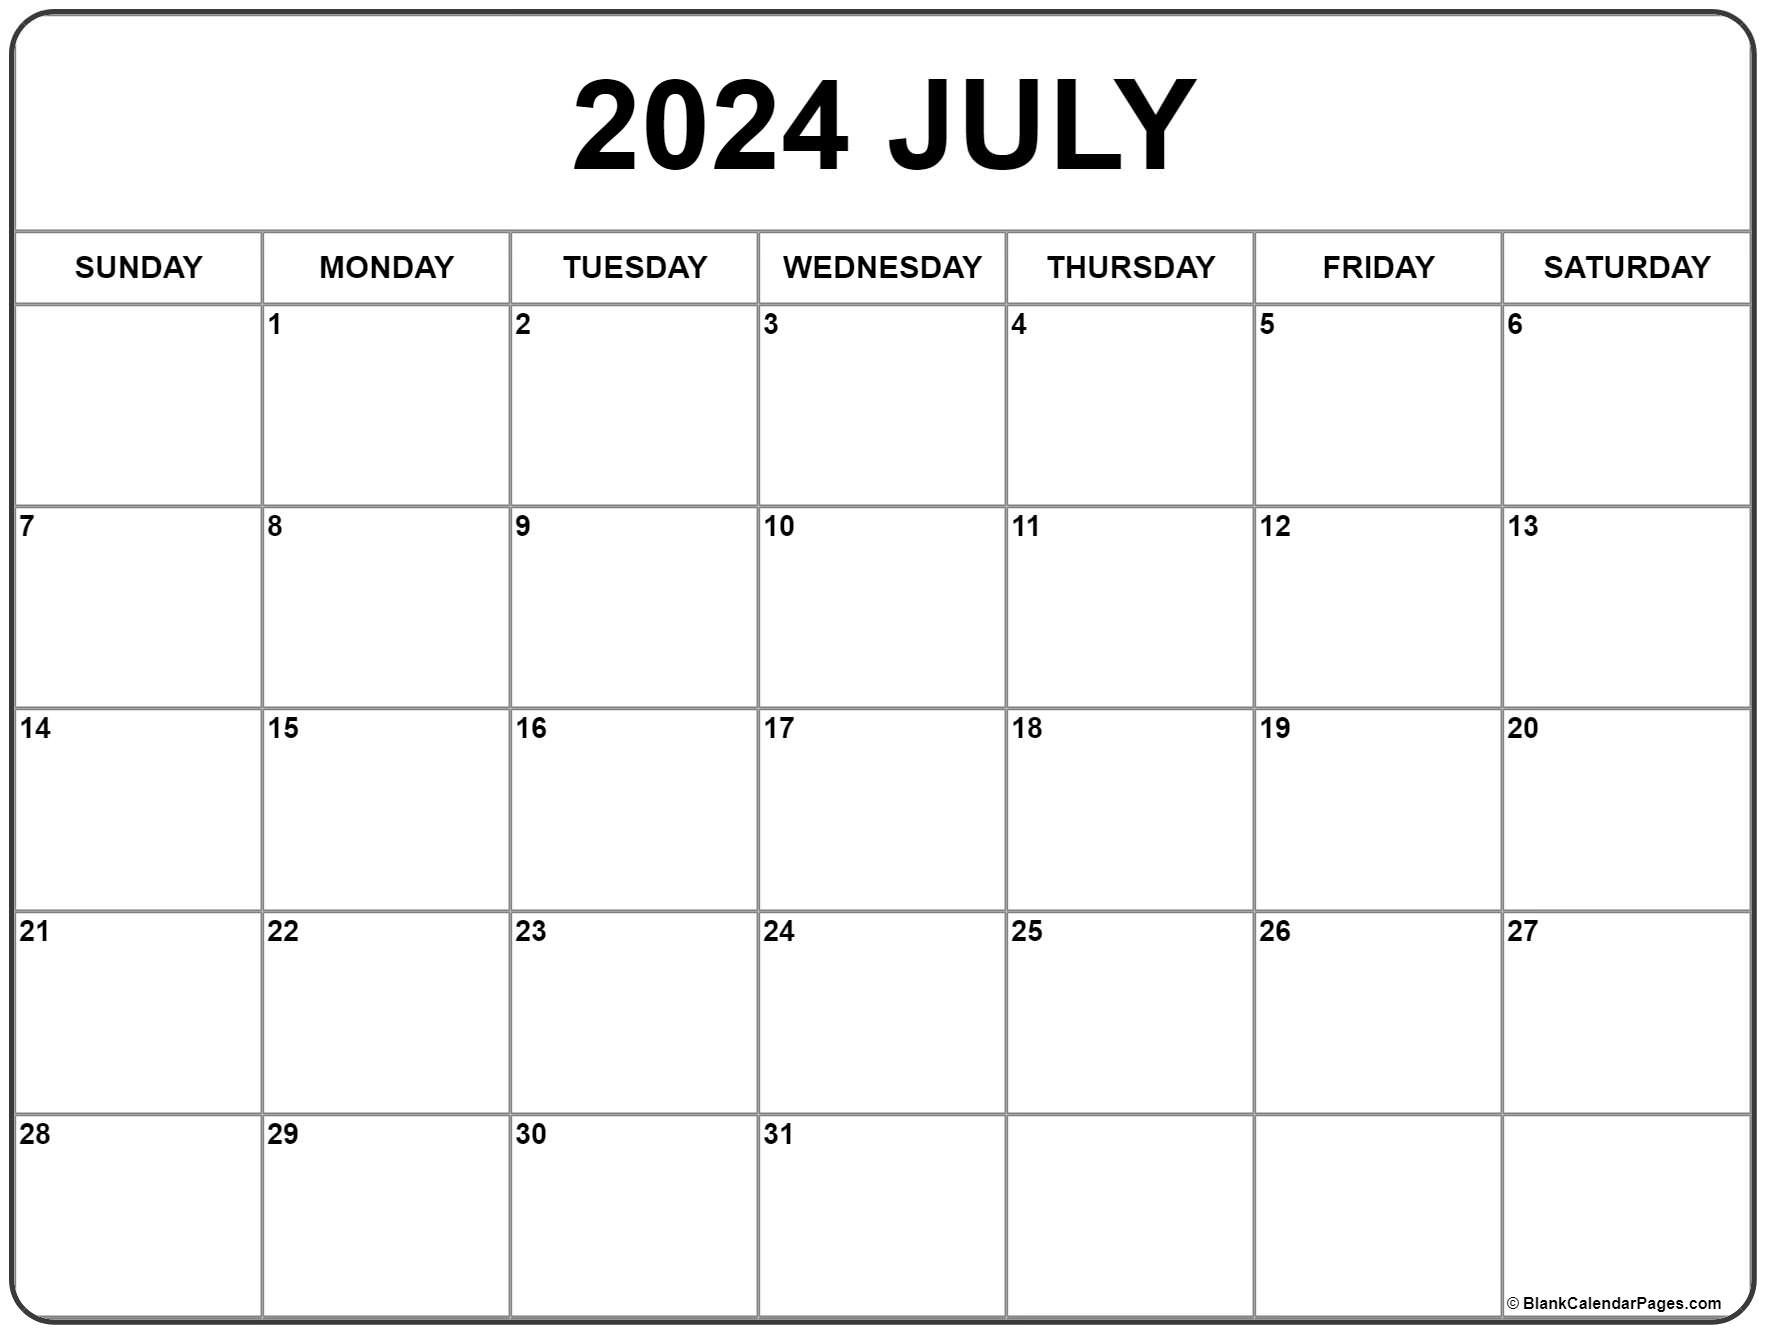 July 2024 Calendar | Free Printable Calendar intended for July Month Calendar 2024